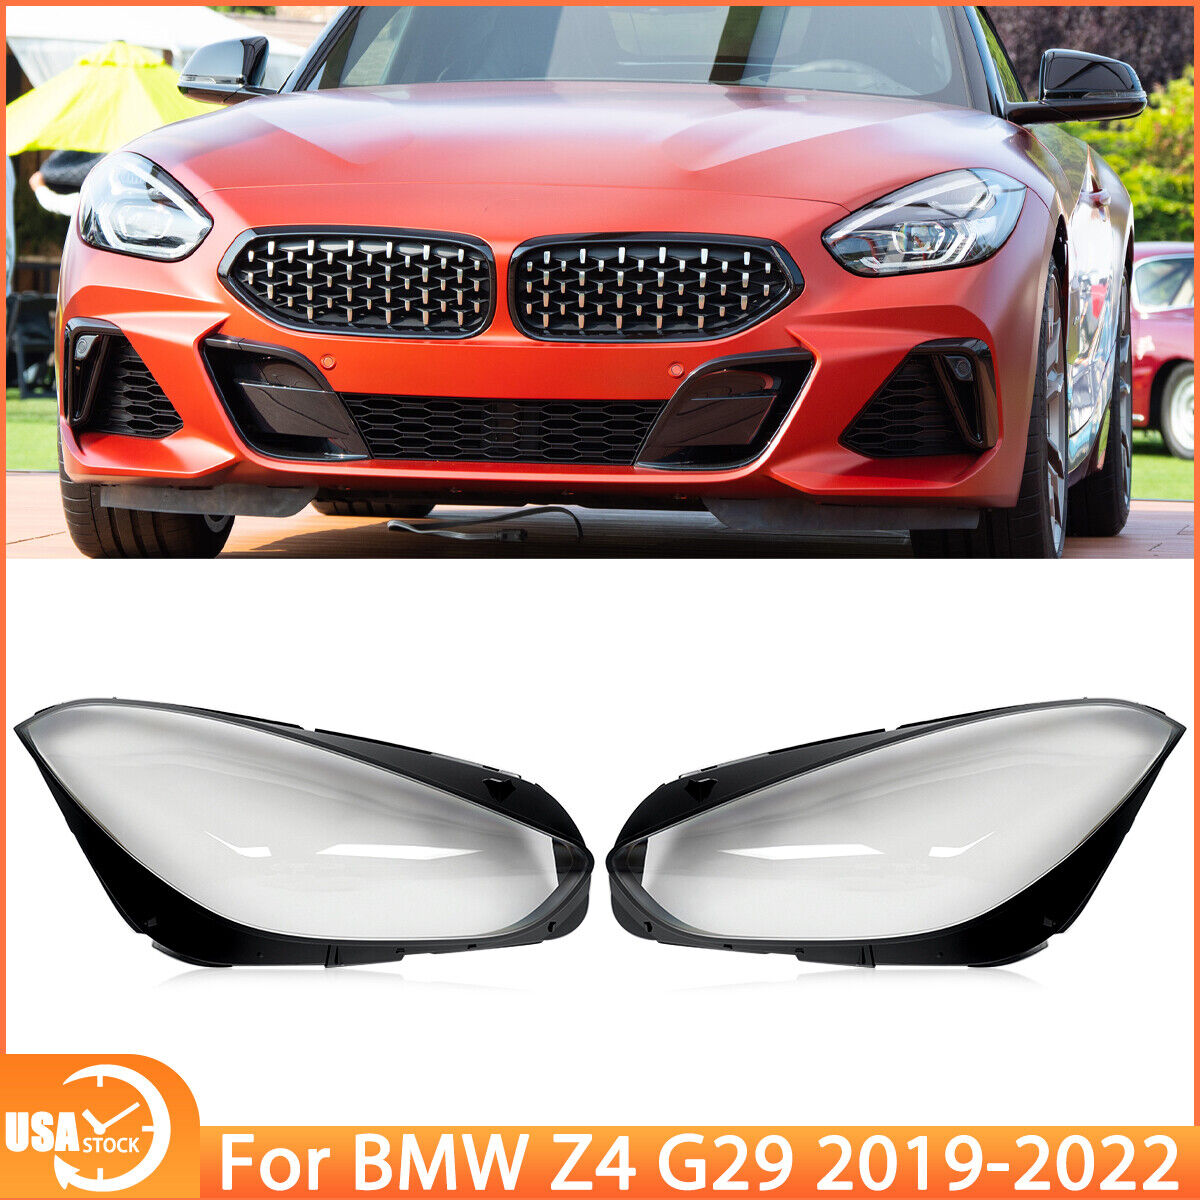 For BMW Z4 G29 2019-2022 Pair Headlight Lens Headlamp Covers Left & Right